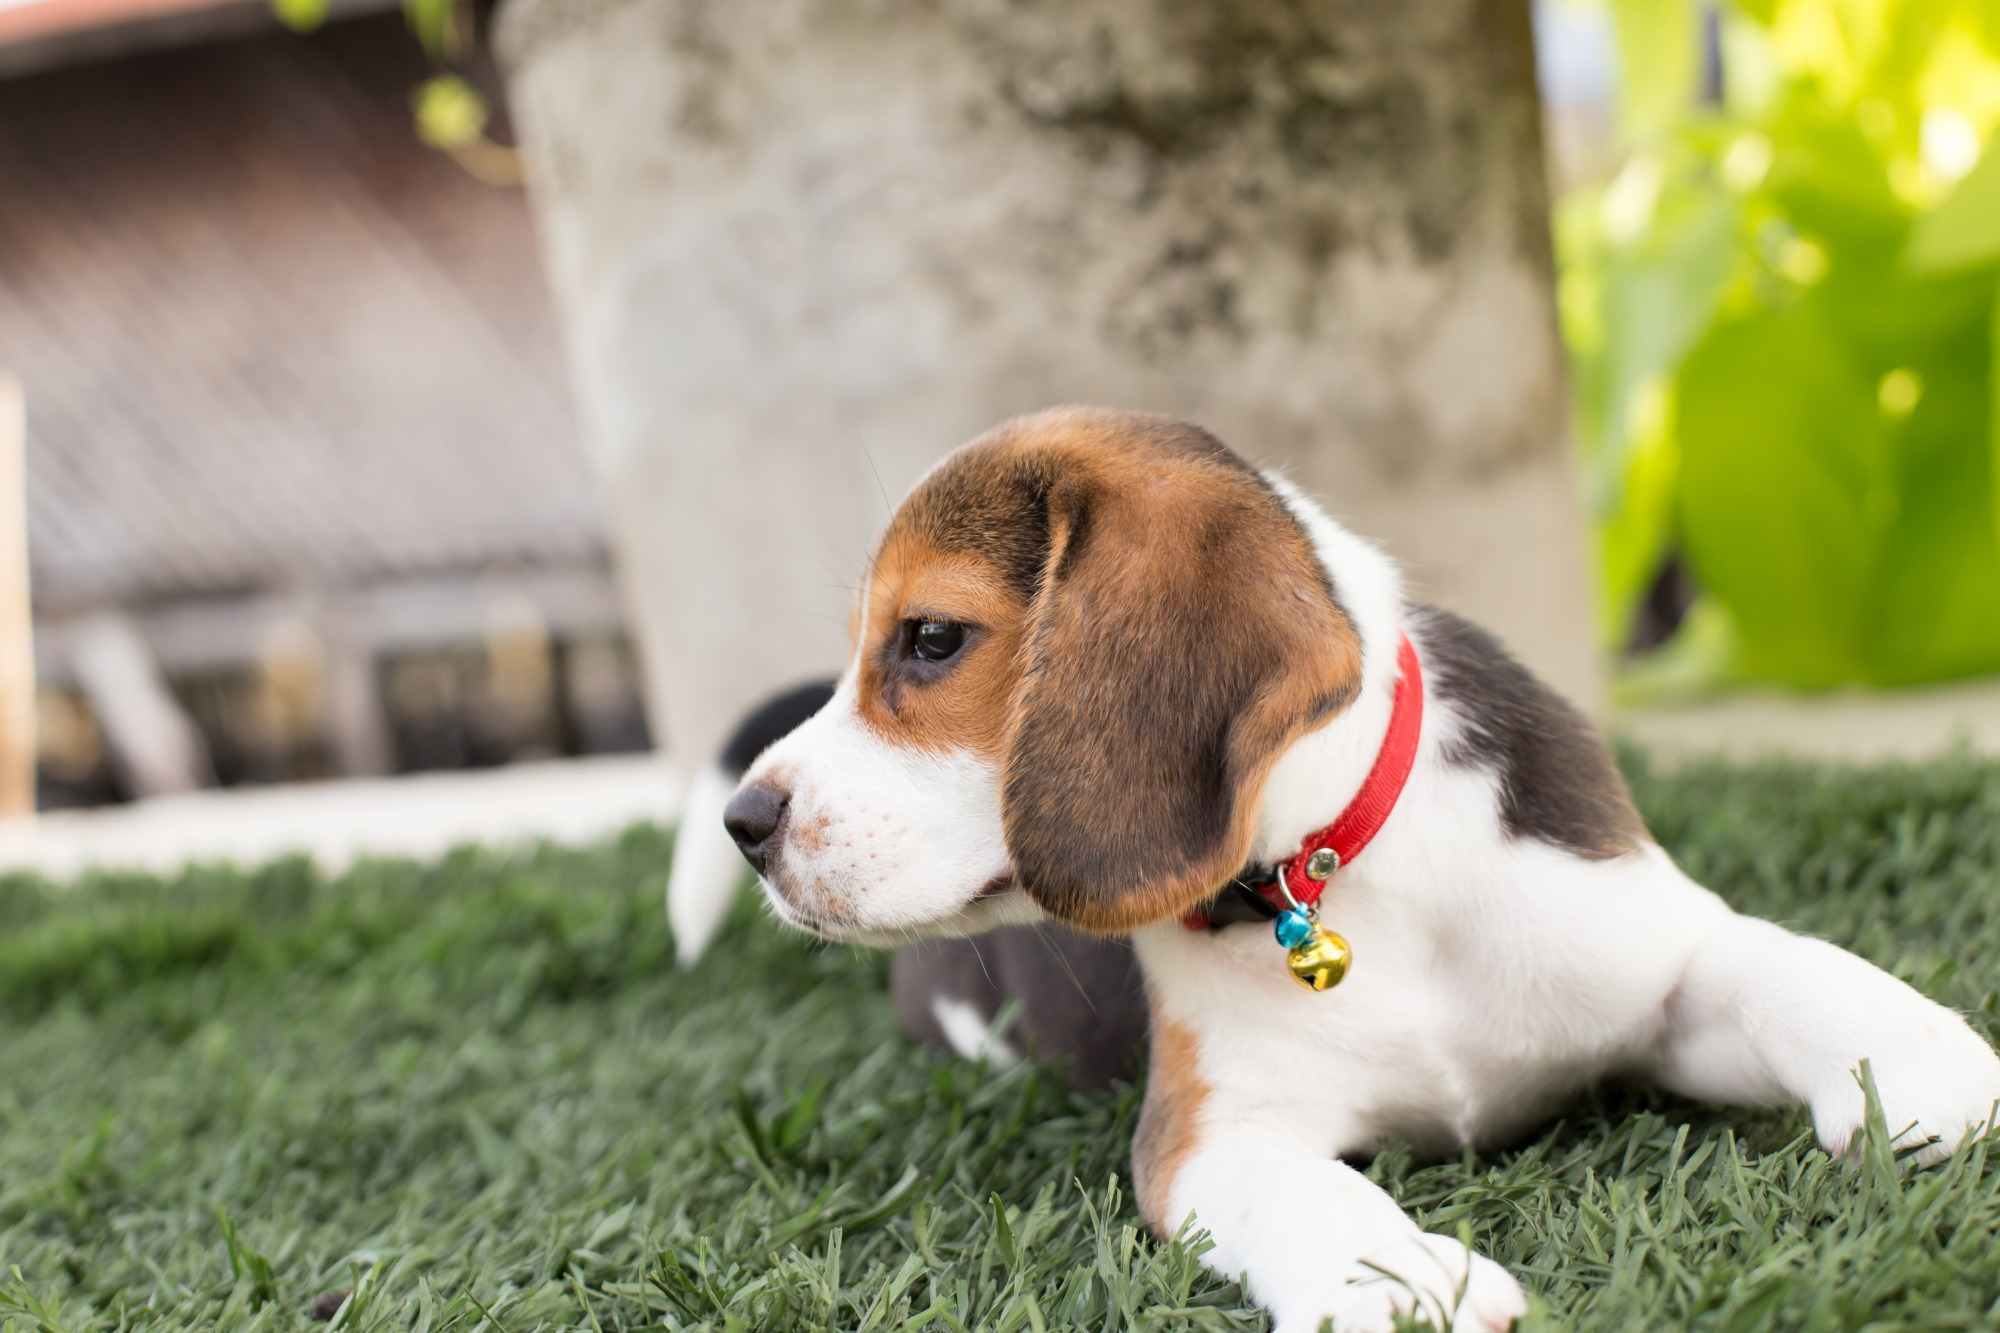 A 95% purebred Beagle dog showcasing its distinctive tricolor coat